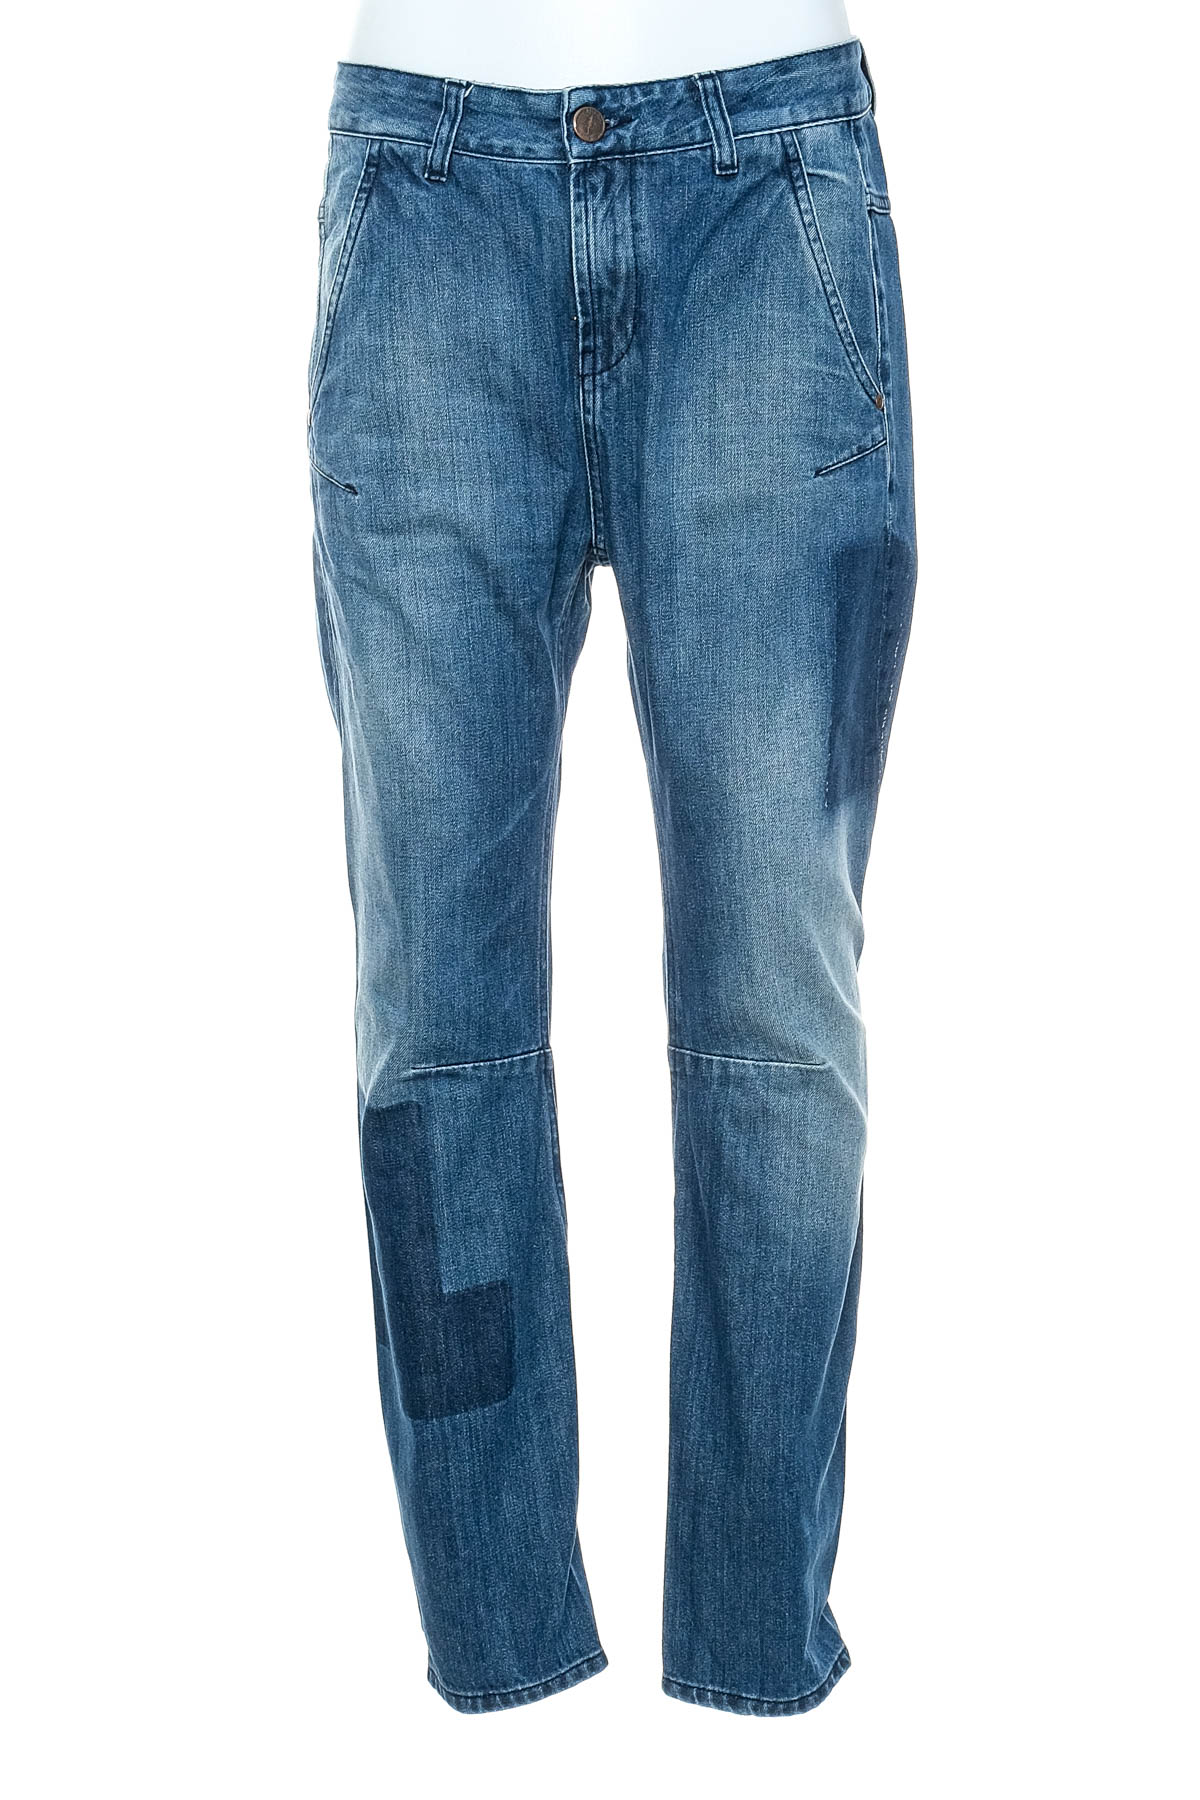 Men's jeans - Maloja - 0